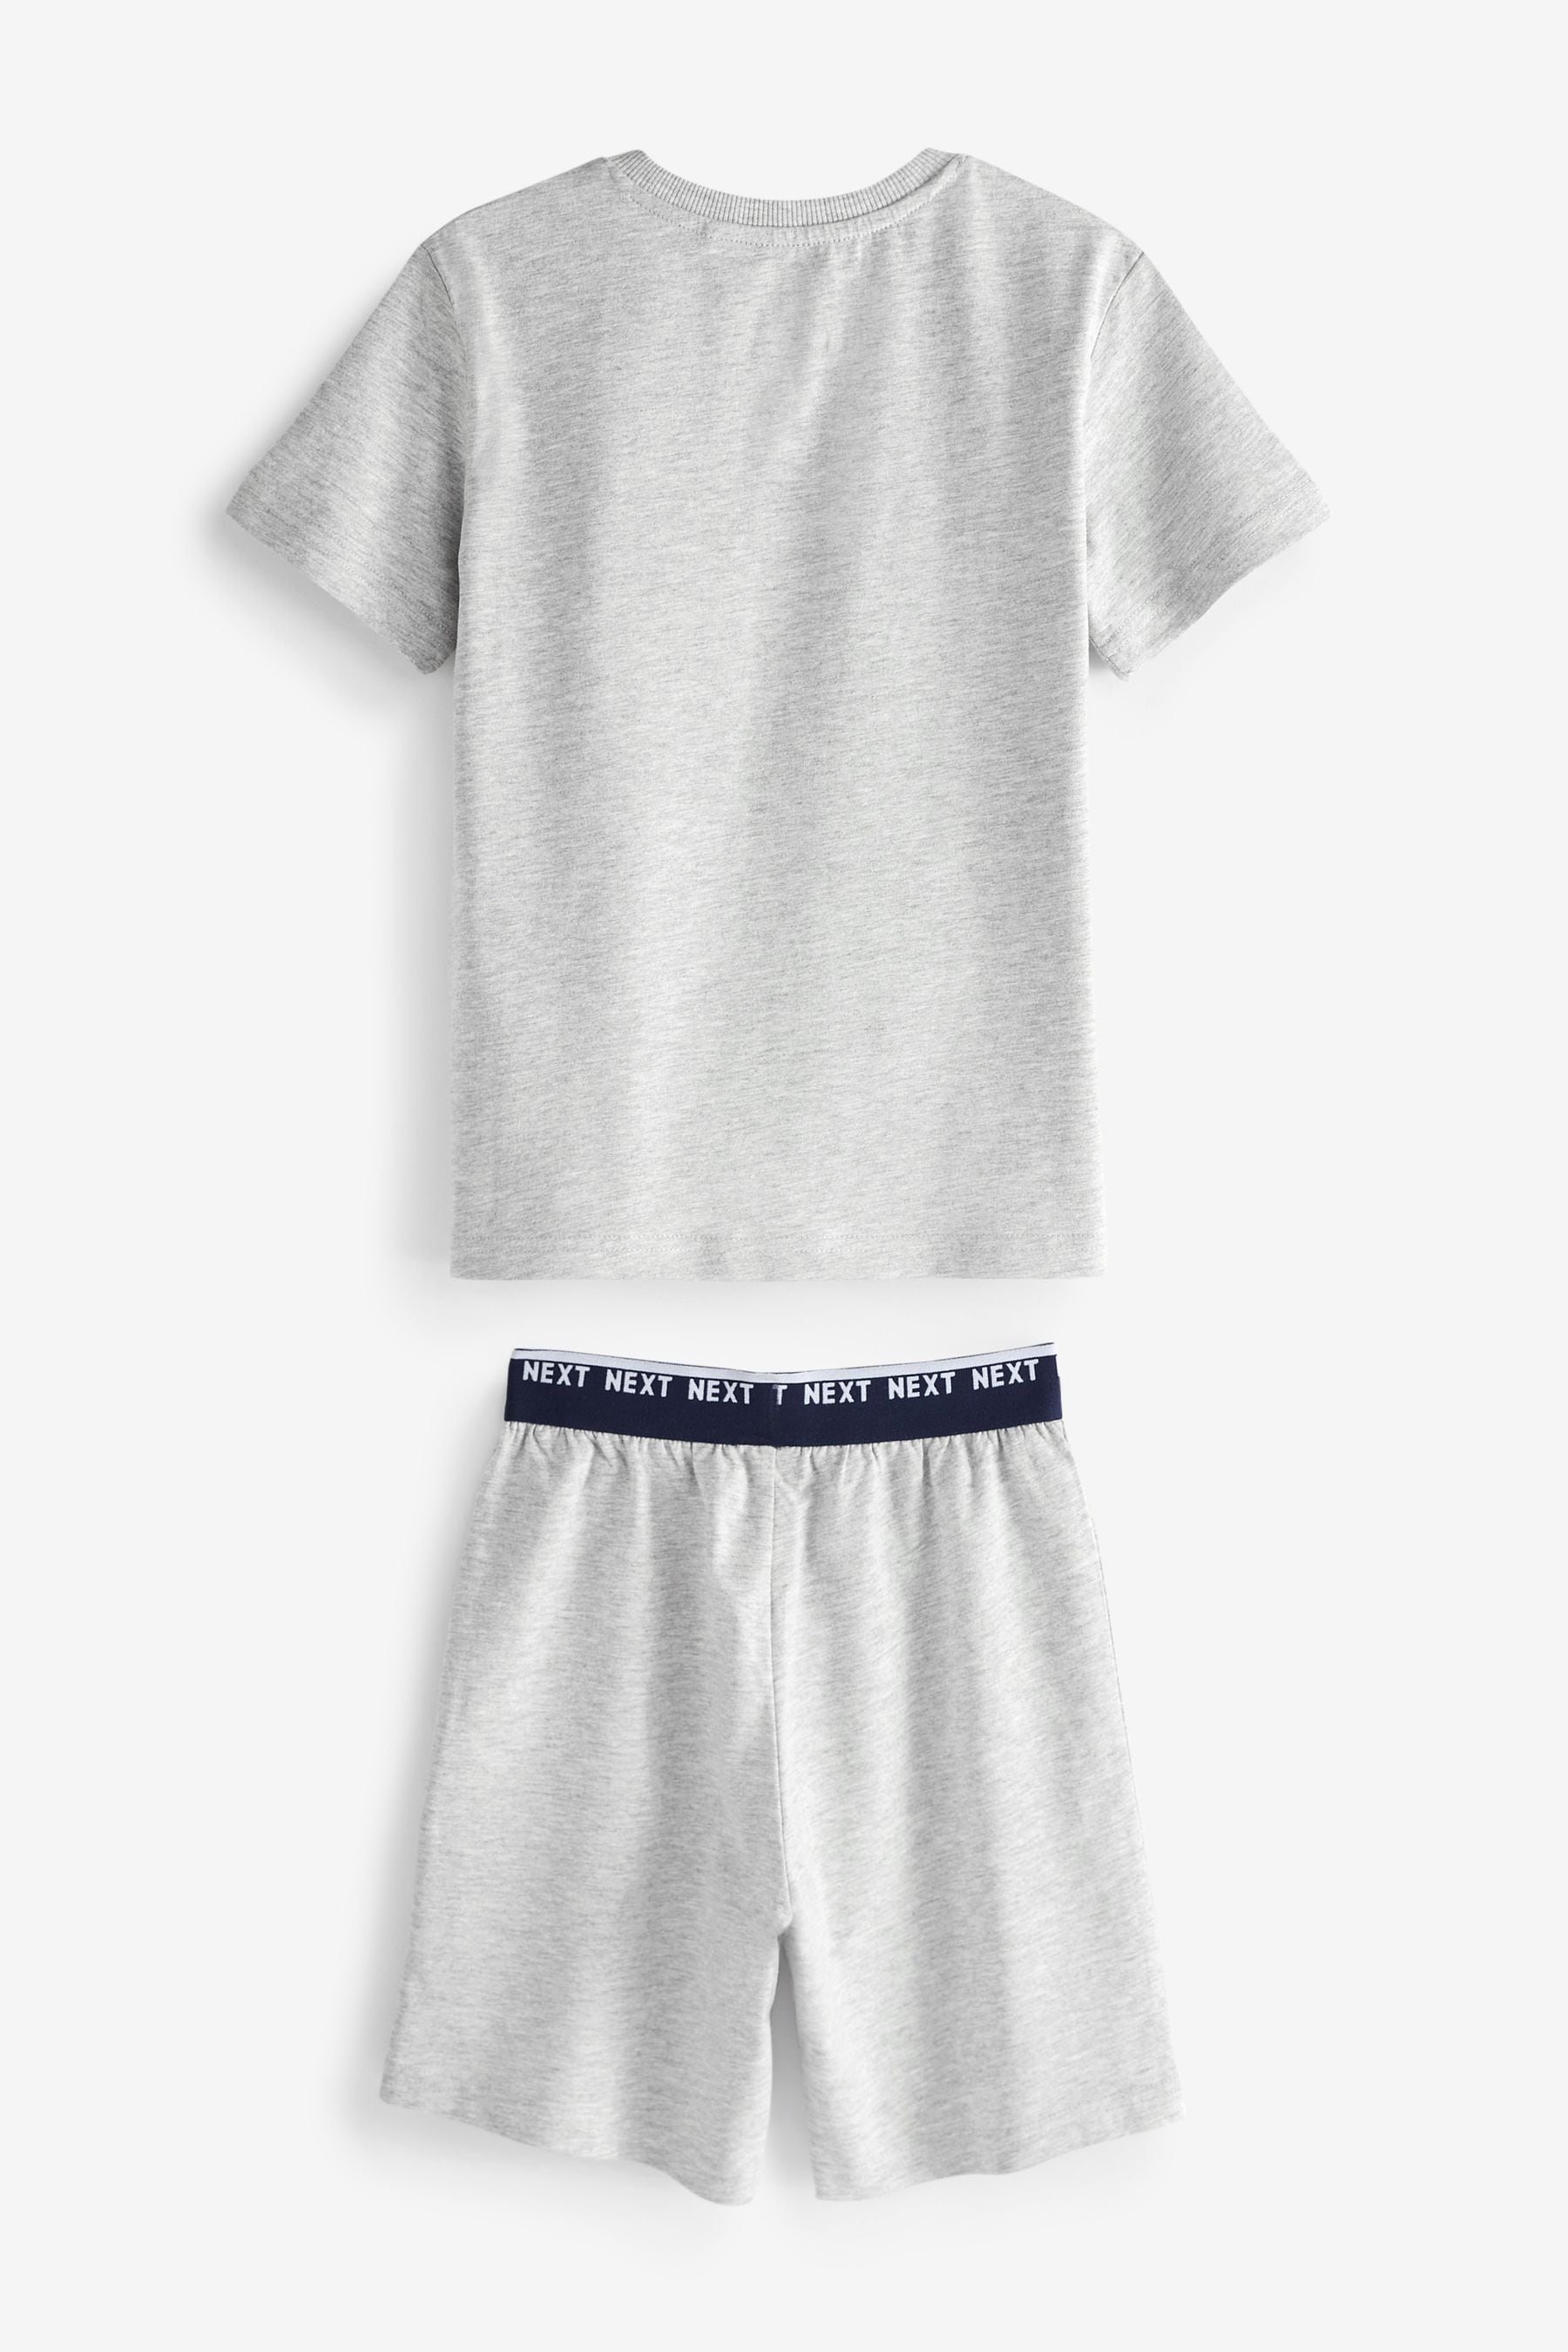 Buy Bluegrey Plain Short Pyjamas 2 Pack 3 16yrs From The Next Uk